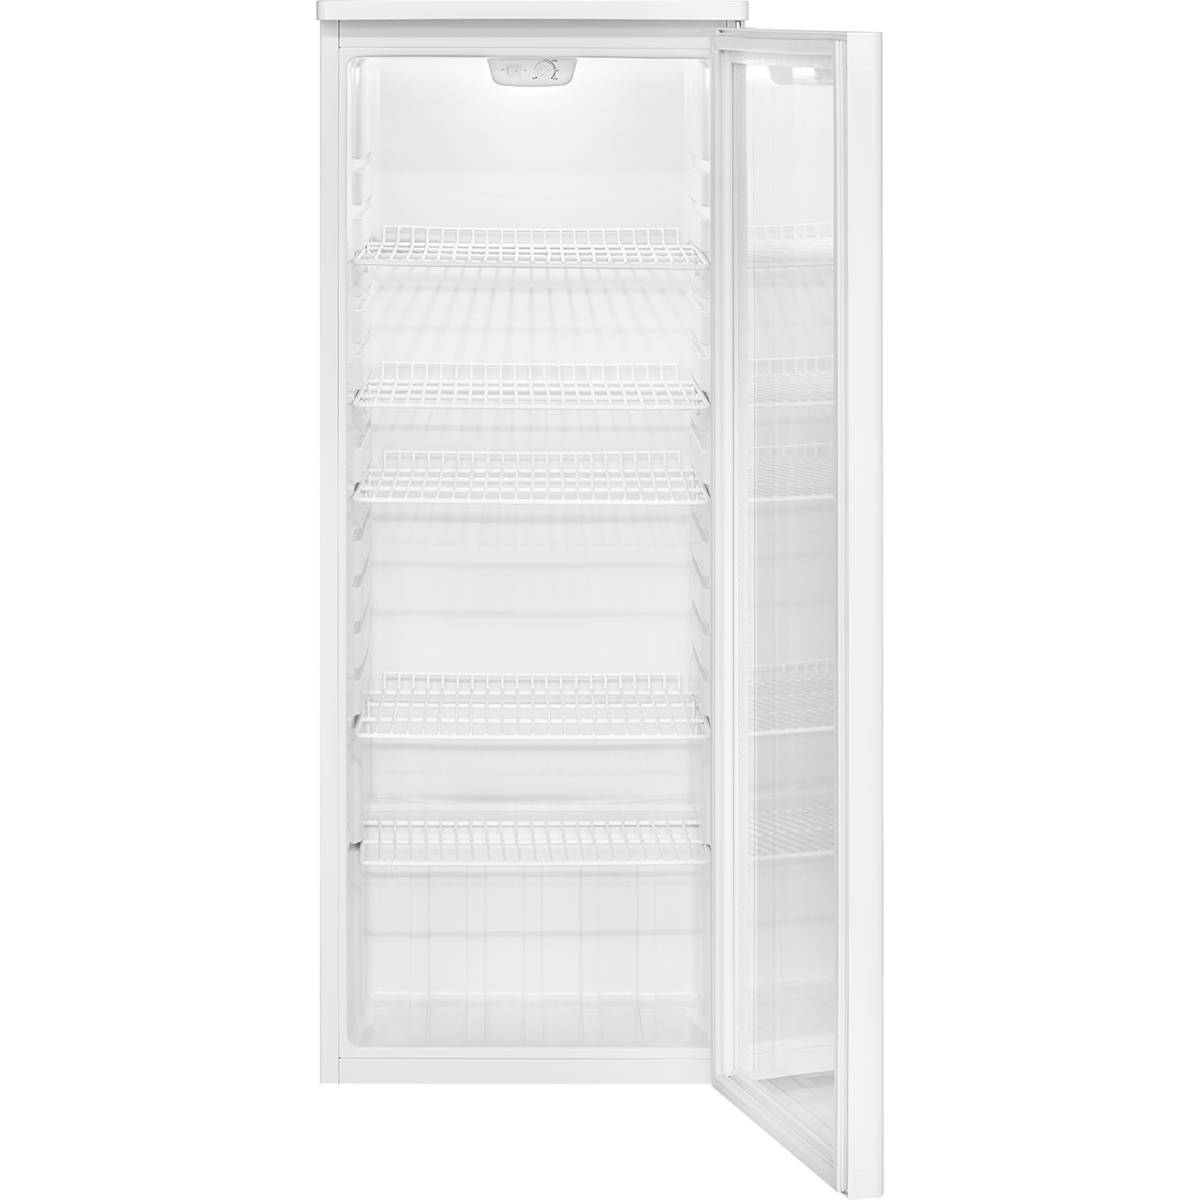 BOMANN KSG 7280.1 Kühlschrank hoch, (F, weiß) 143 cm